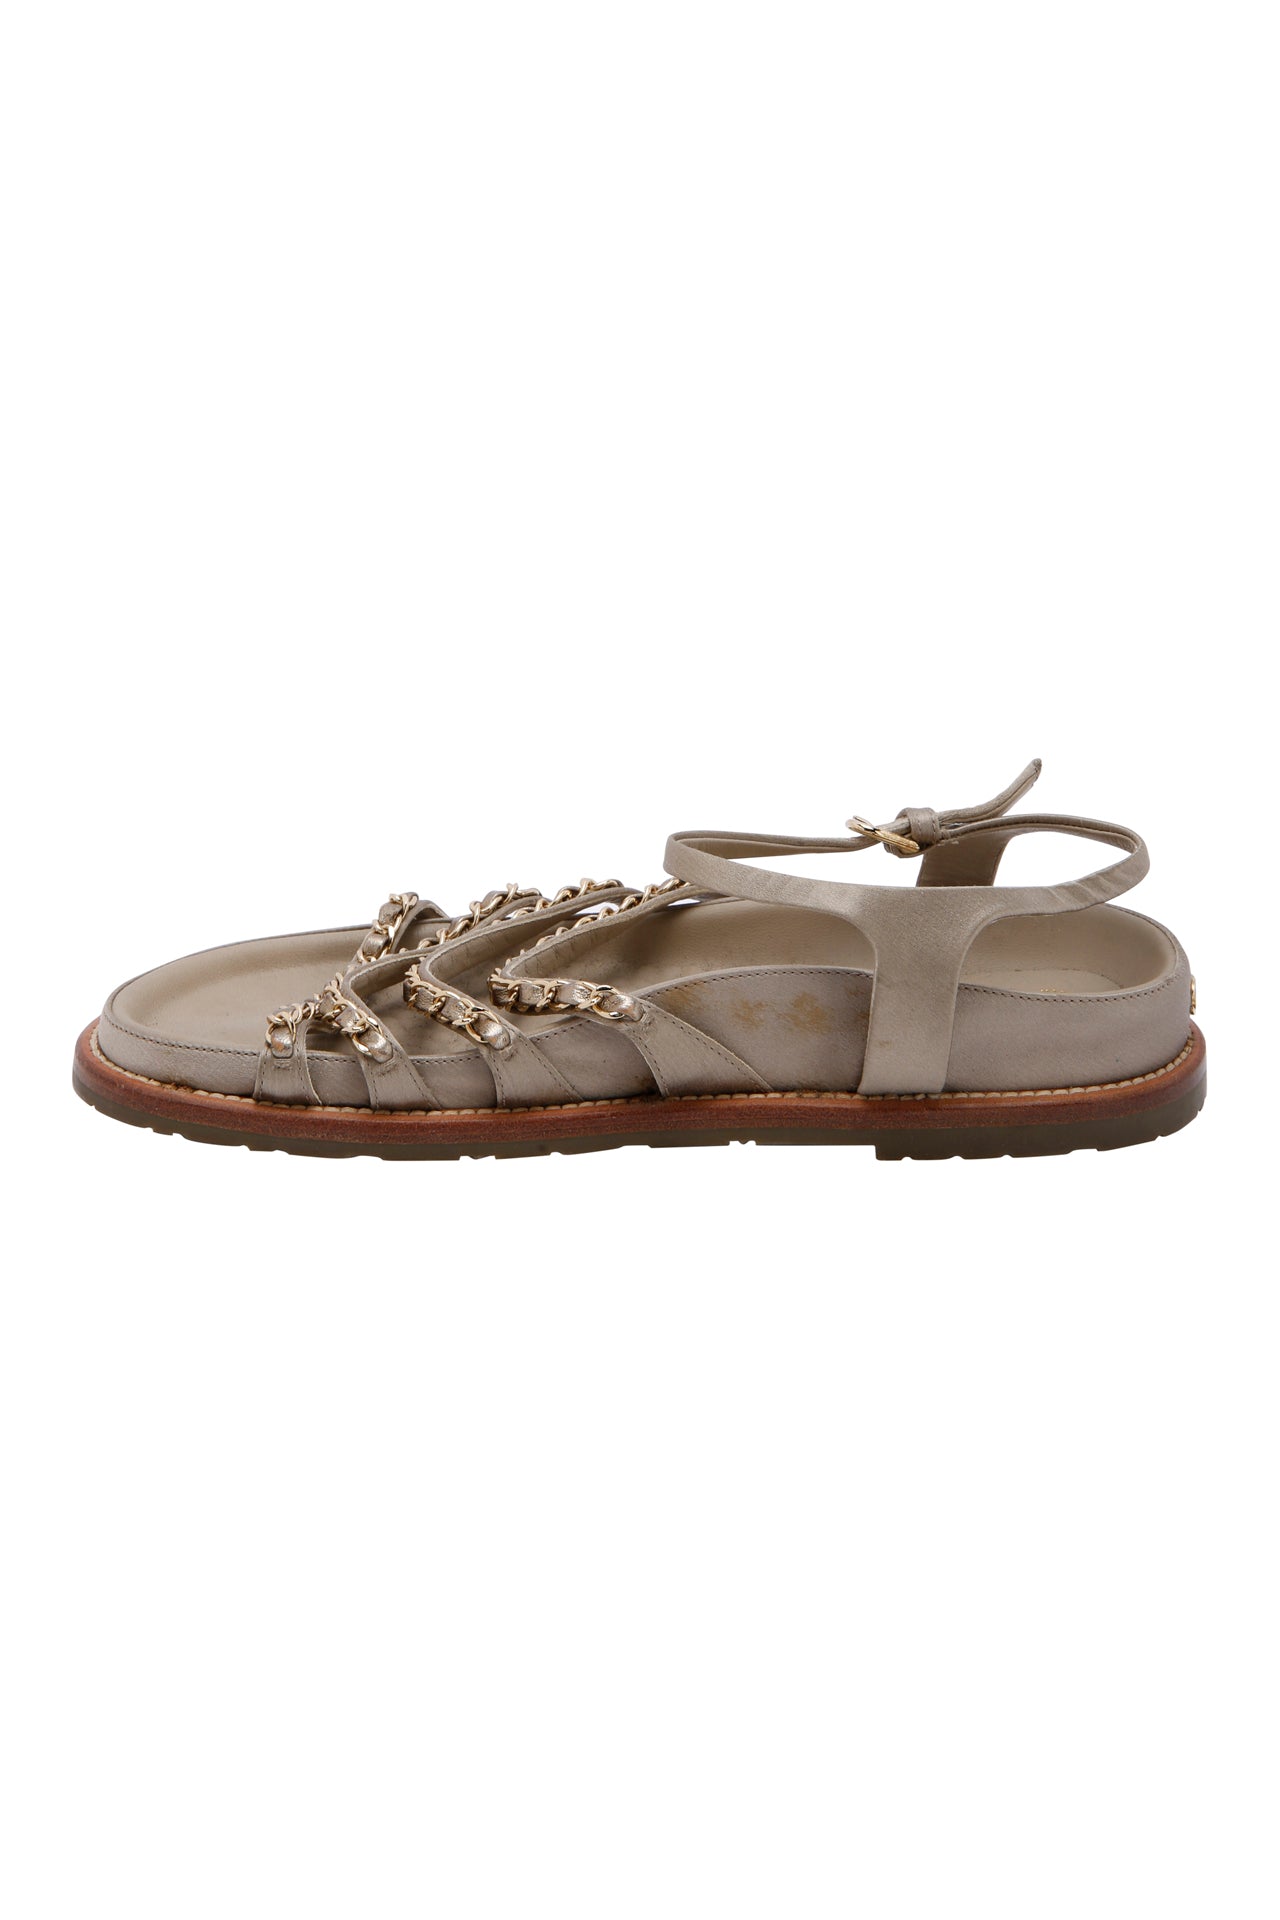 CHANEL Satin Lambskin Flat Sandals w/ 10mm Chain- Link Strap Size 38